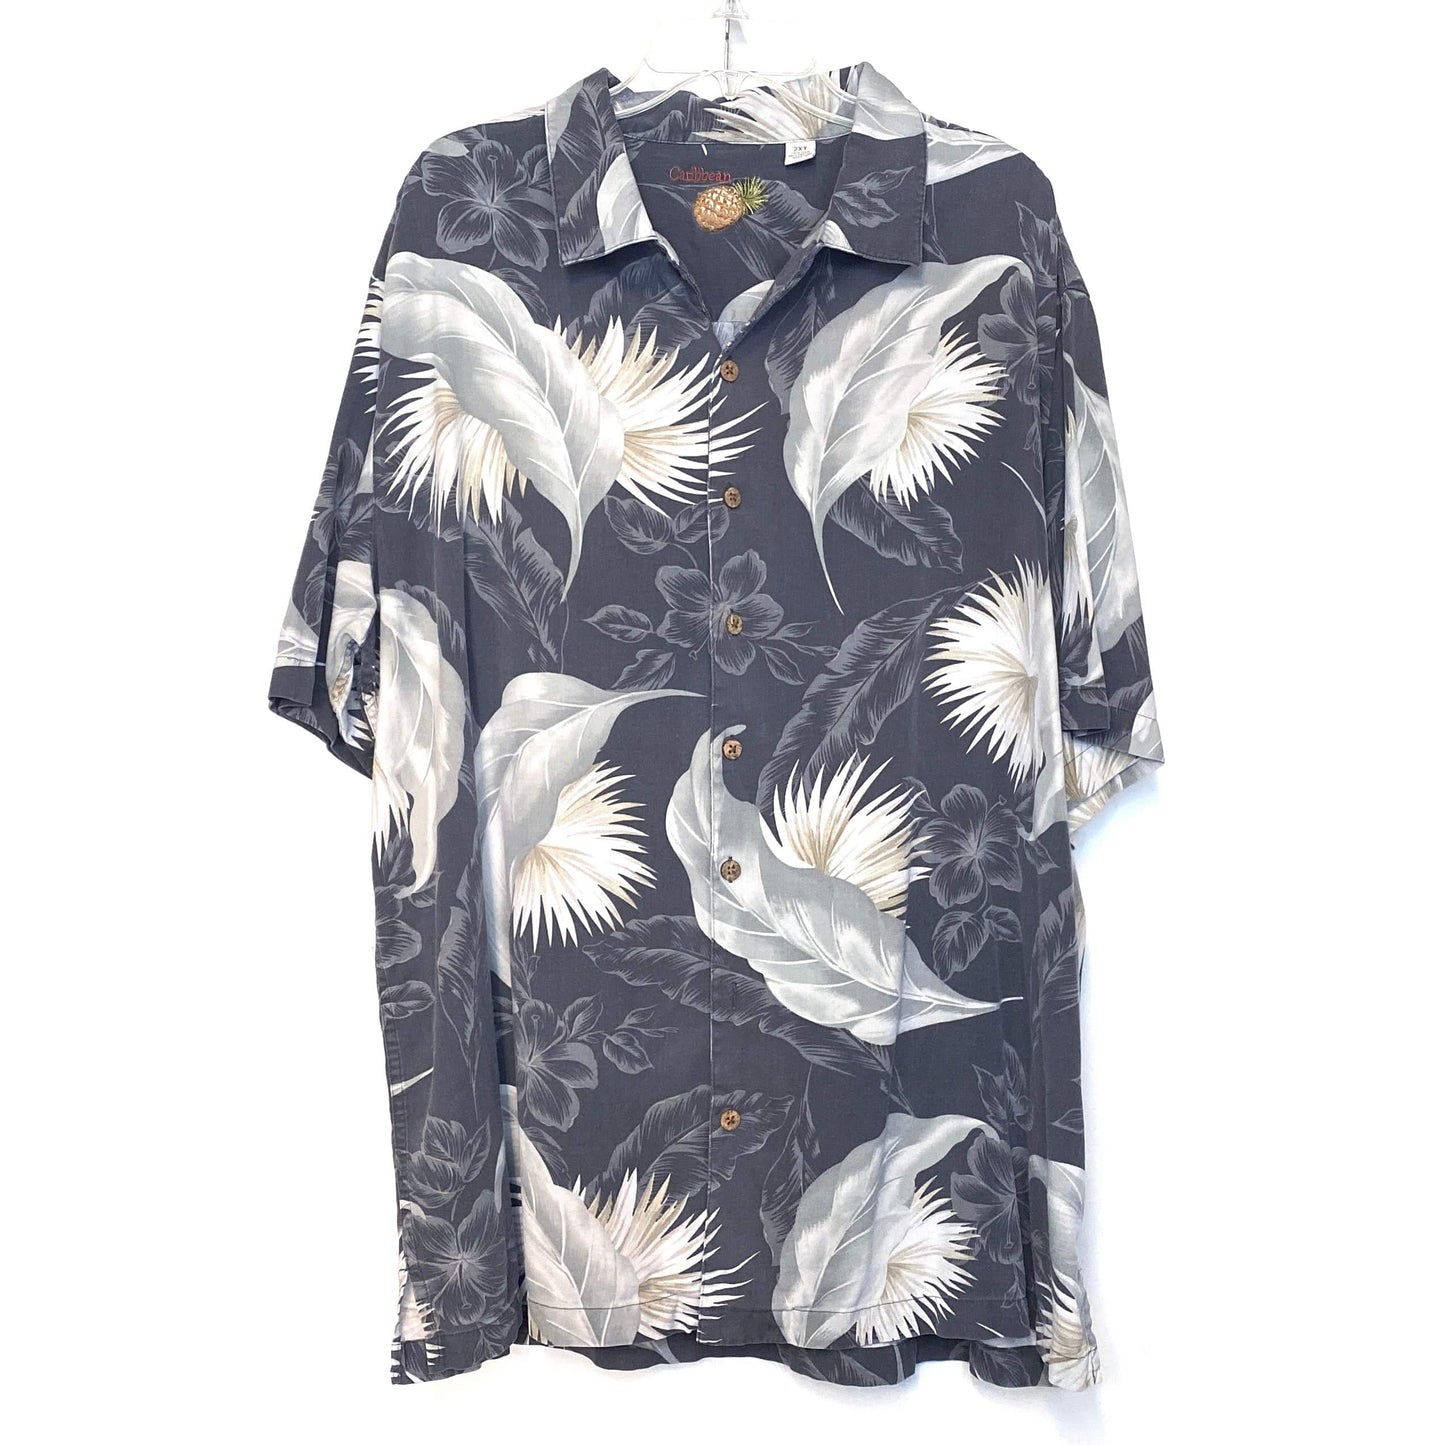 Caribbean Mens Size 2XT Gray Hawaiian Shirt Tropical Floral Pattern S/s